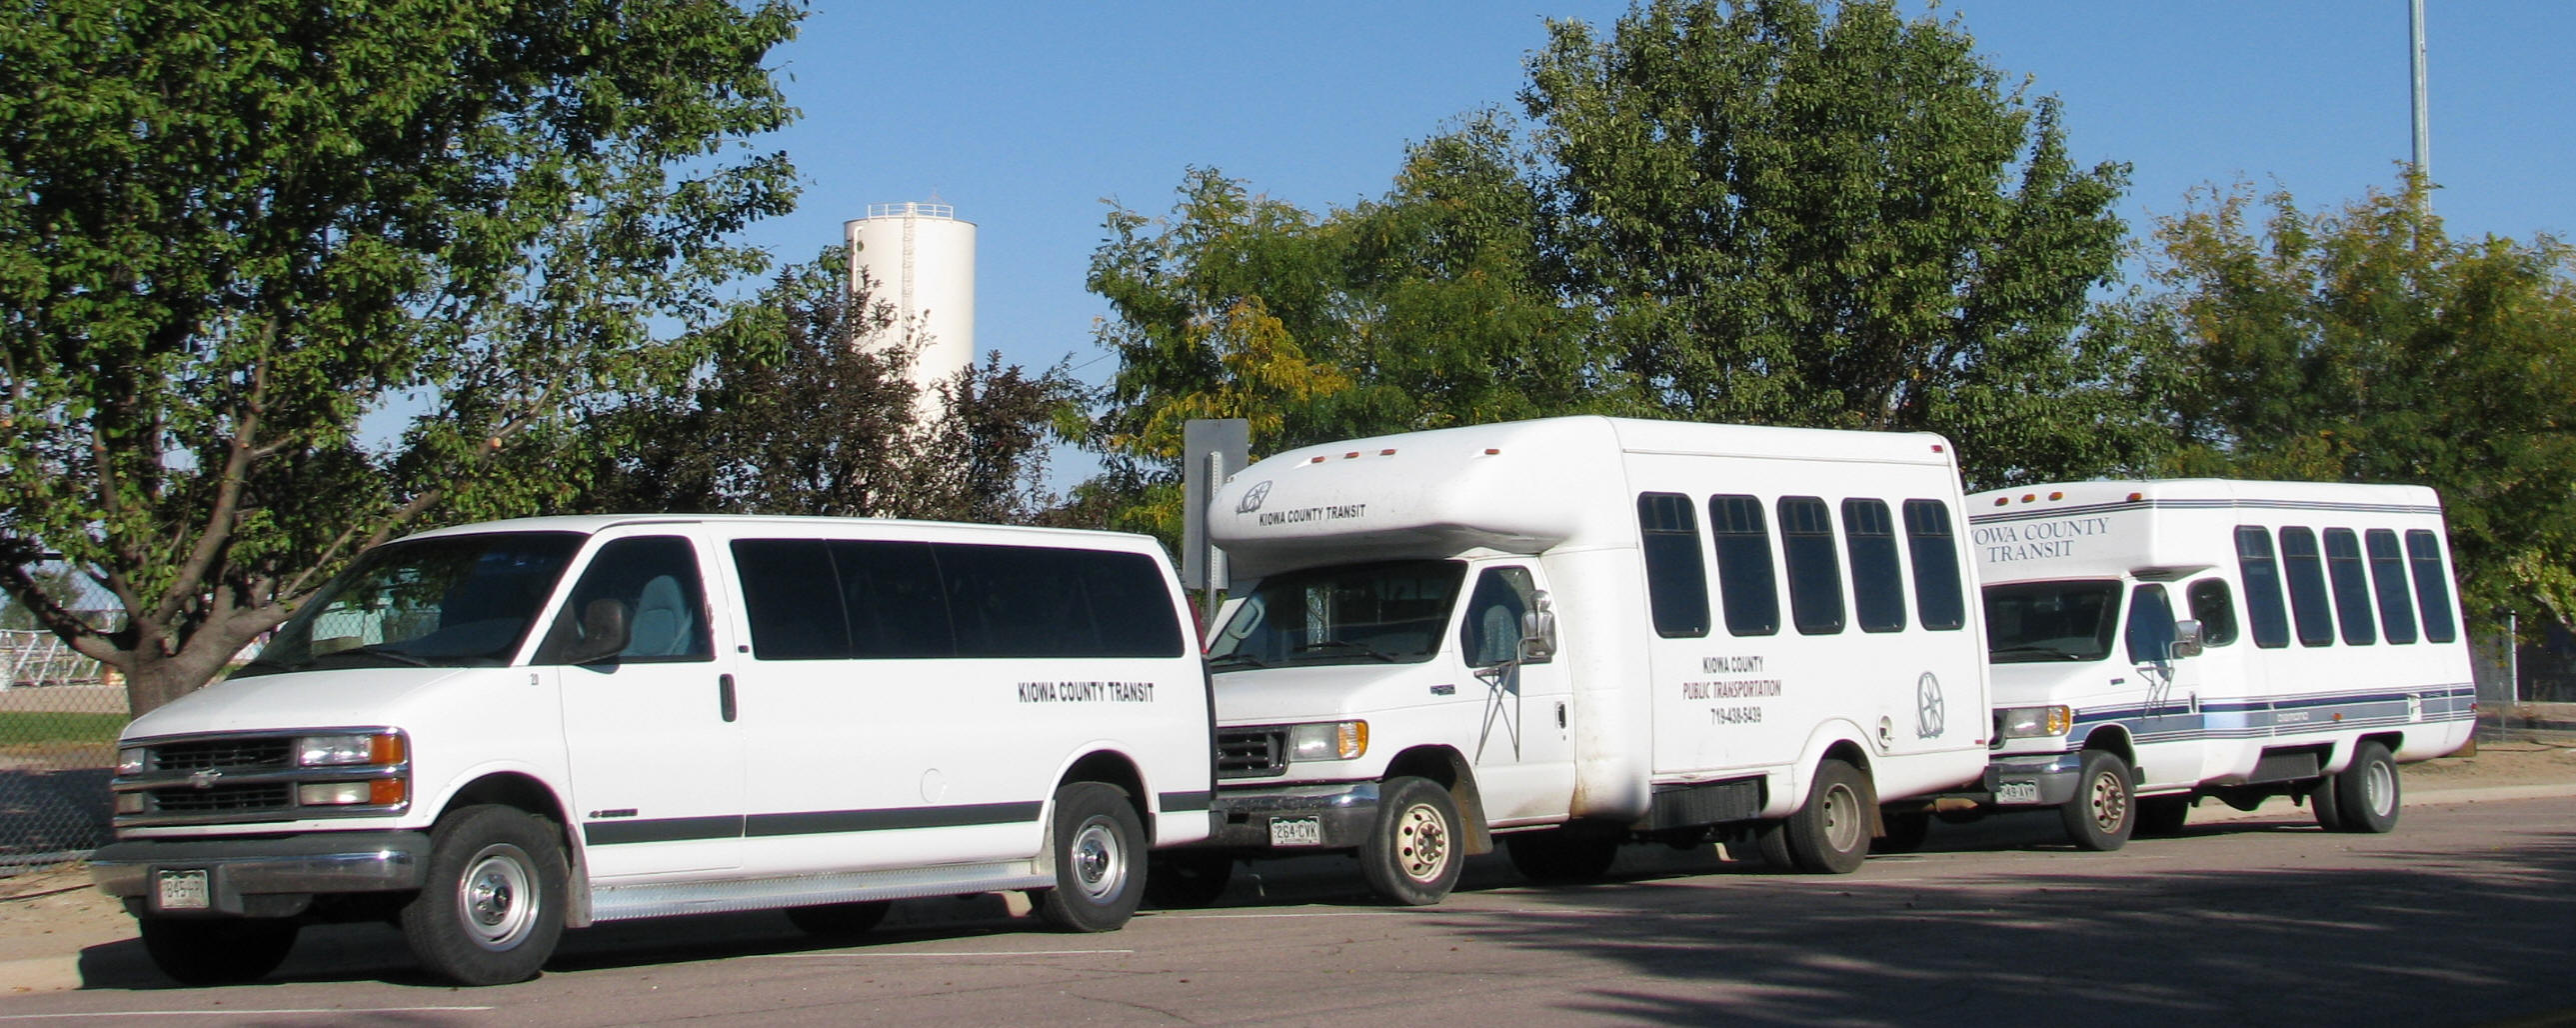 Kiowa County Transit Vans